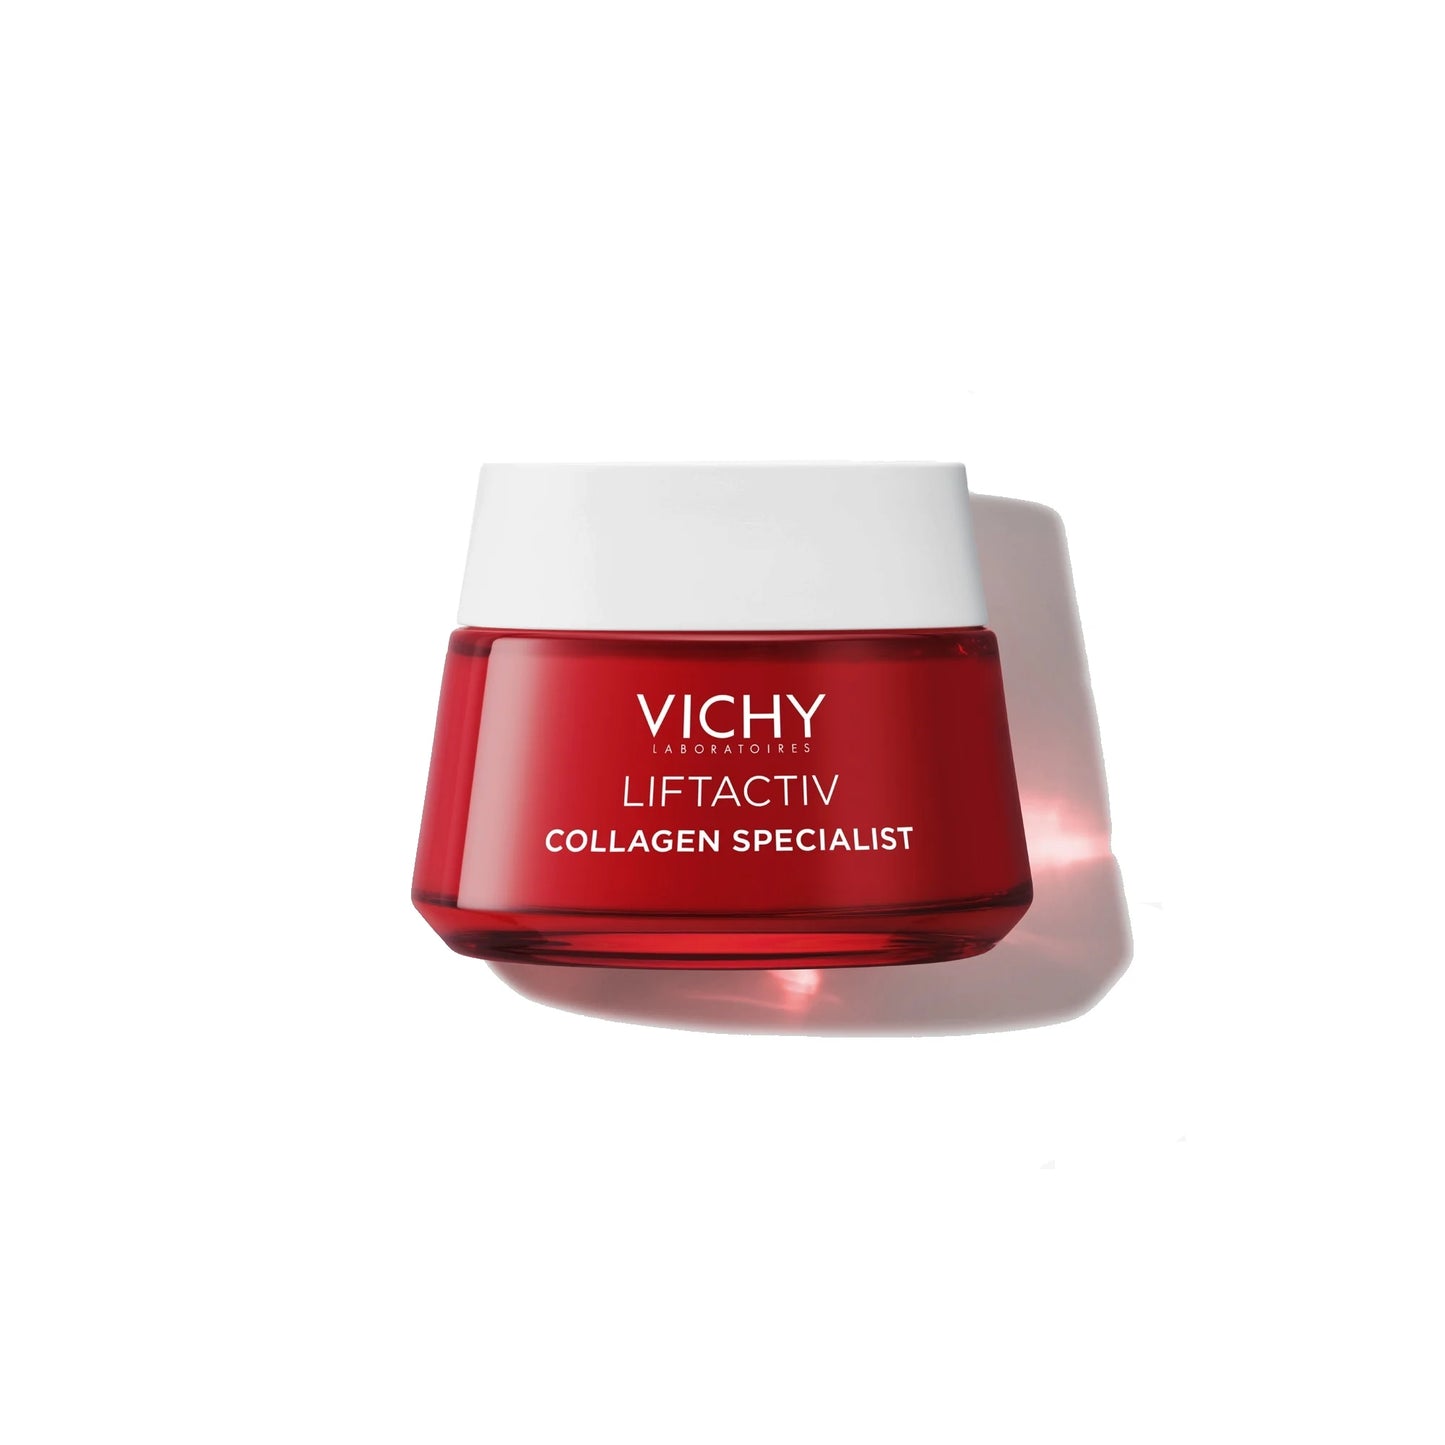 Liftactiv Collagen Specialist Vichy